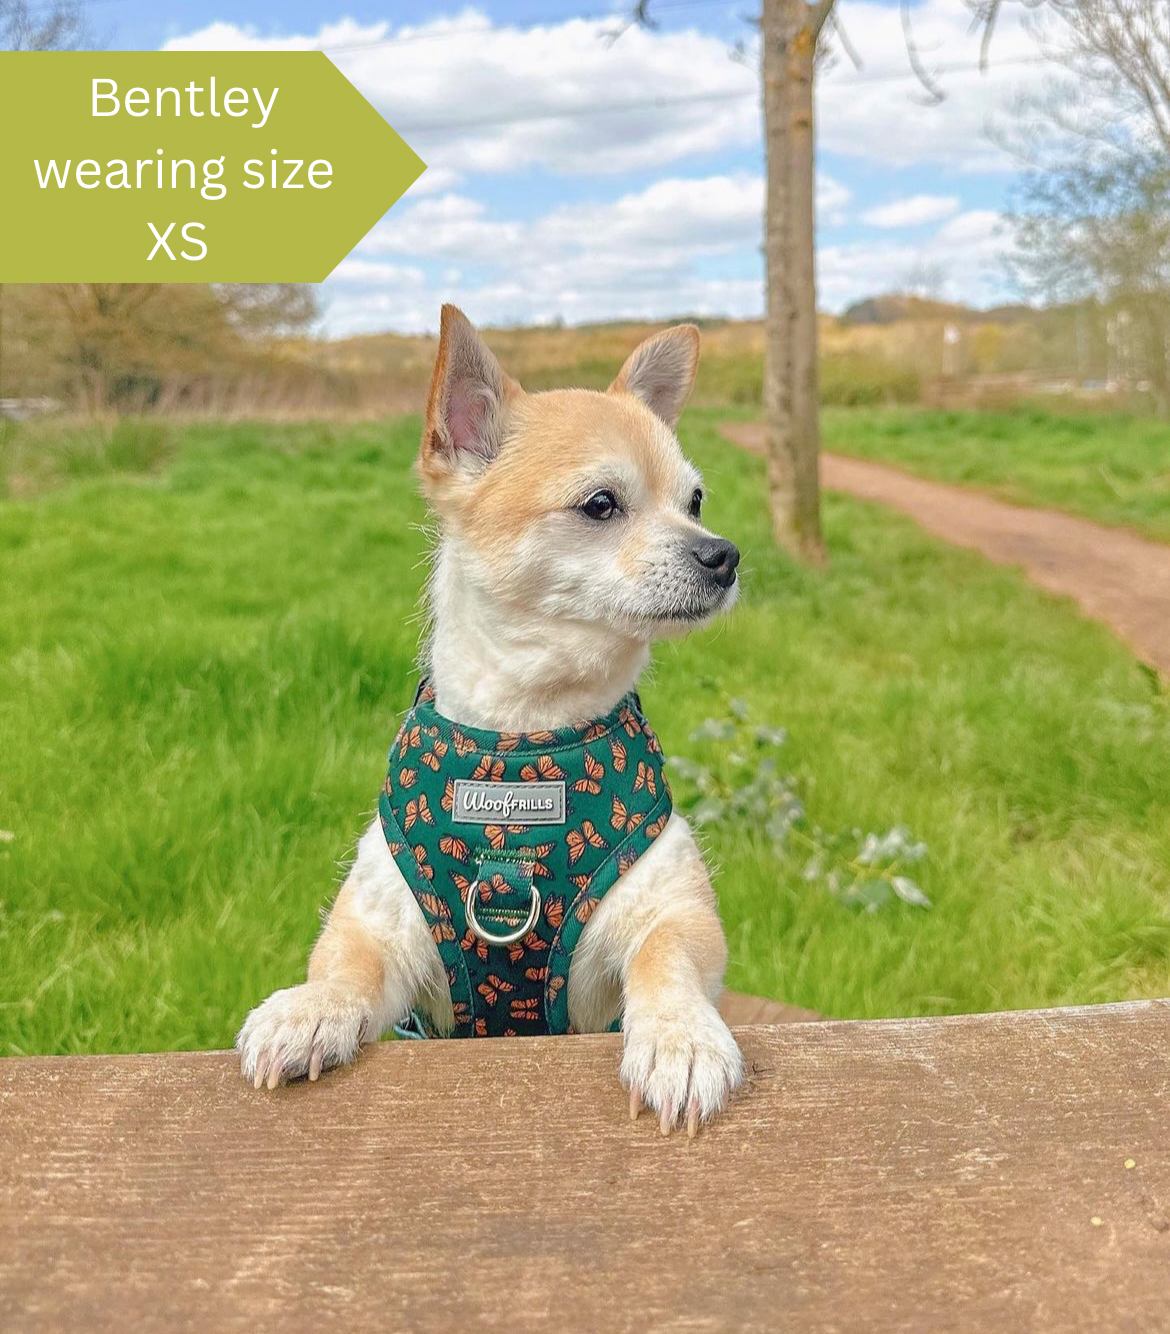 Chihuahua wearing a tiny harness